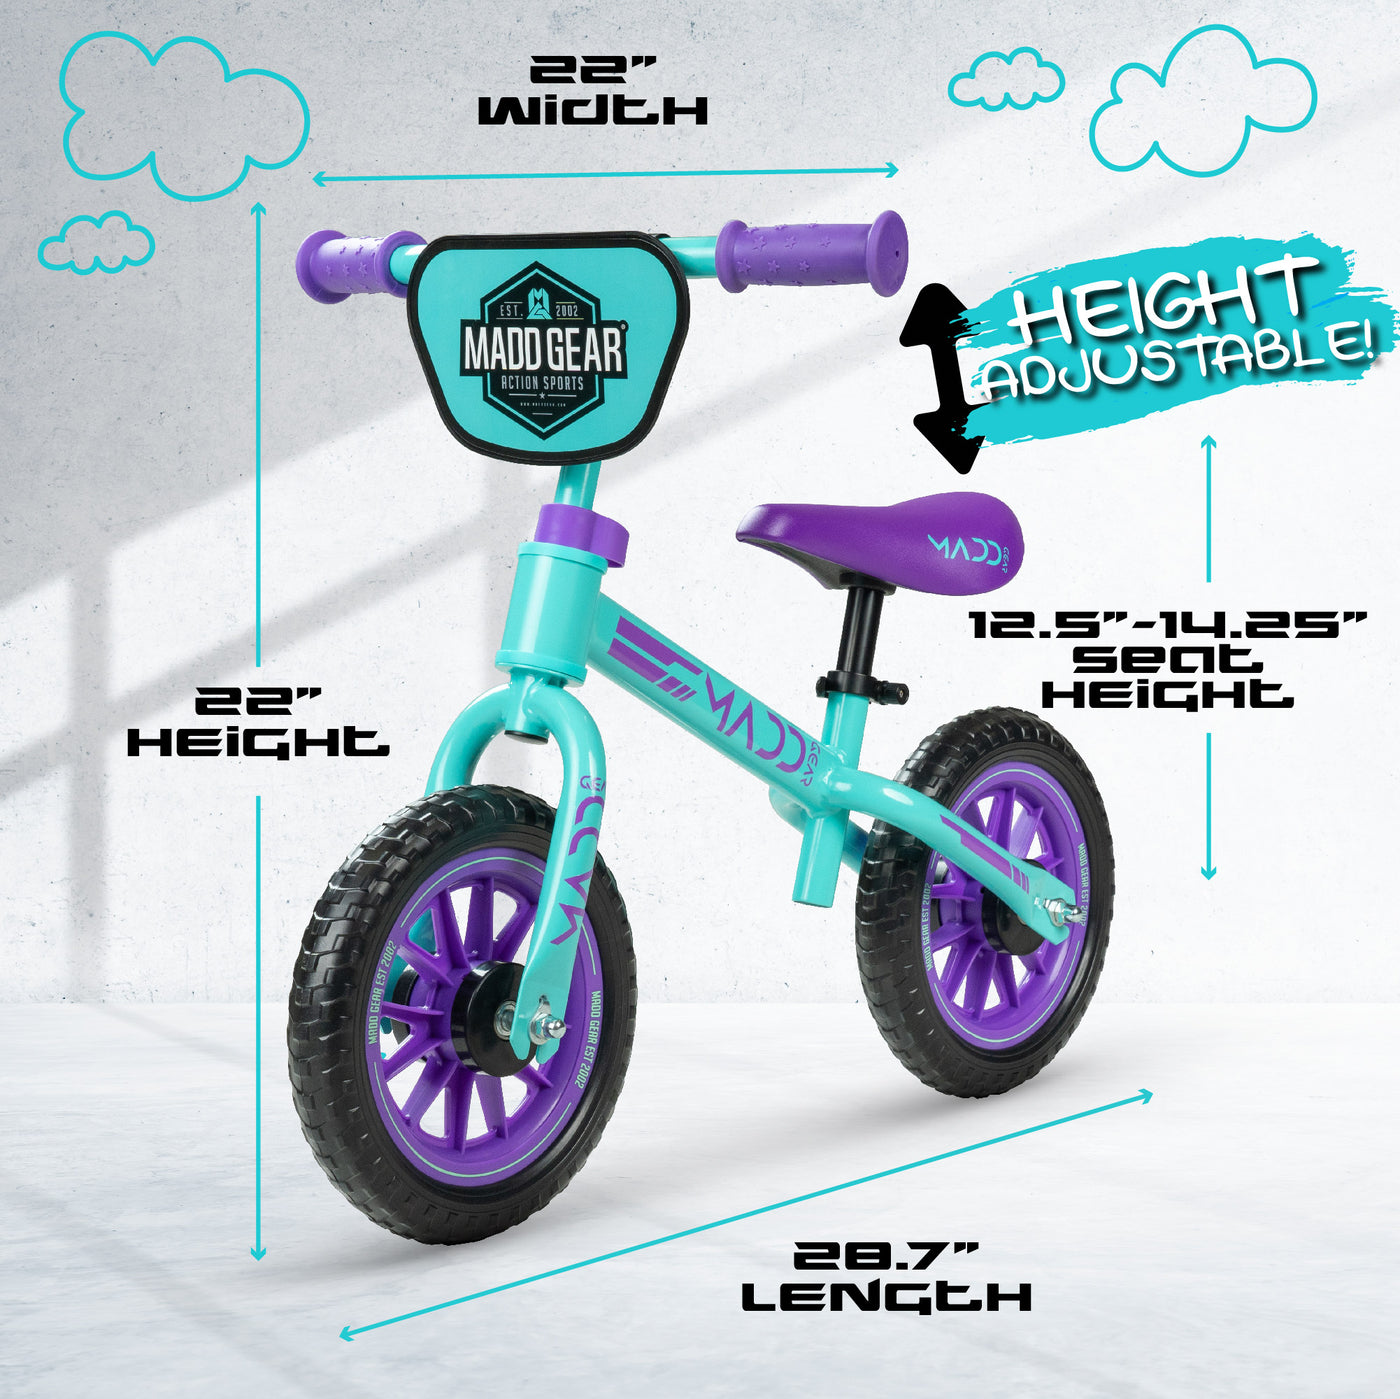 Madd Gear Madgear Strider Trainer Balance Bike Toddler Kids Height Adjustable Teal Purple